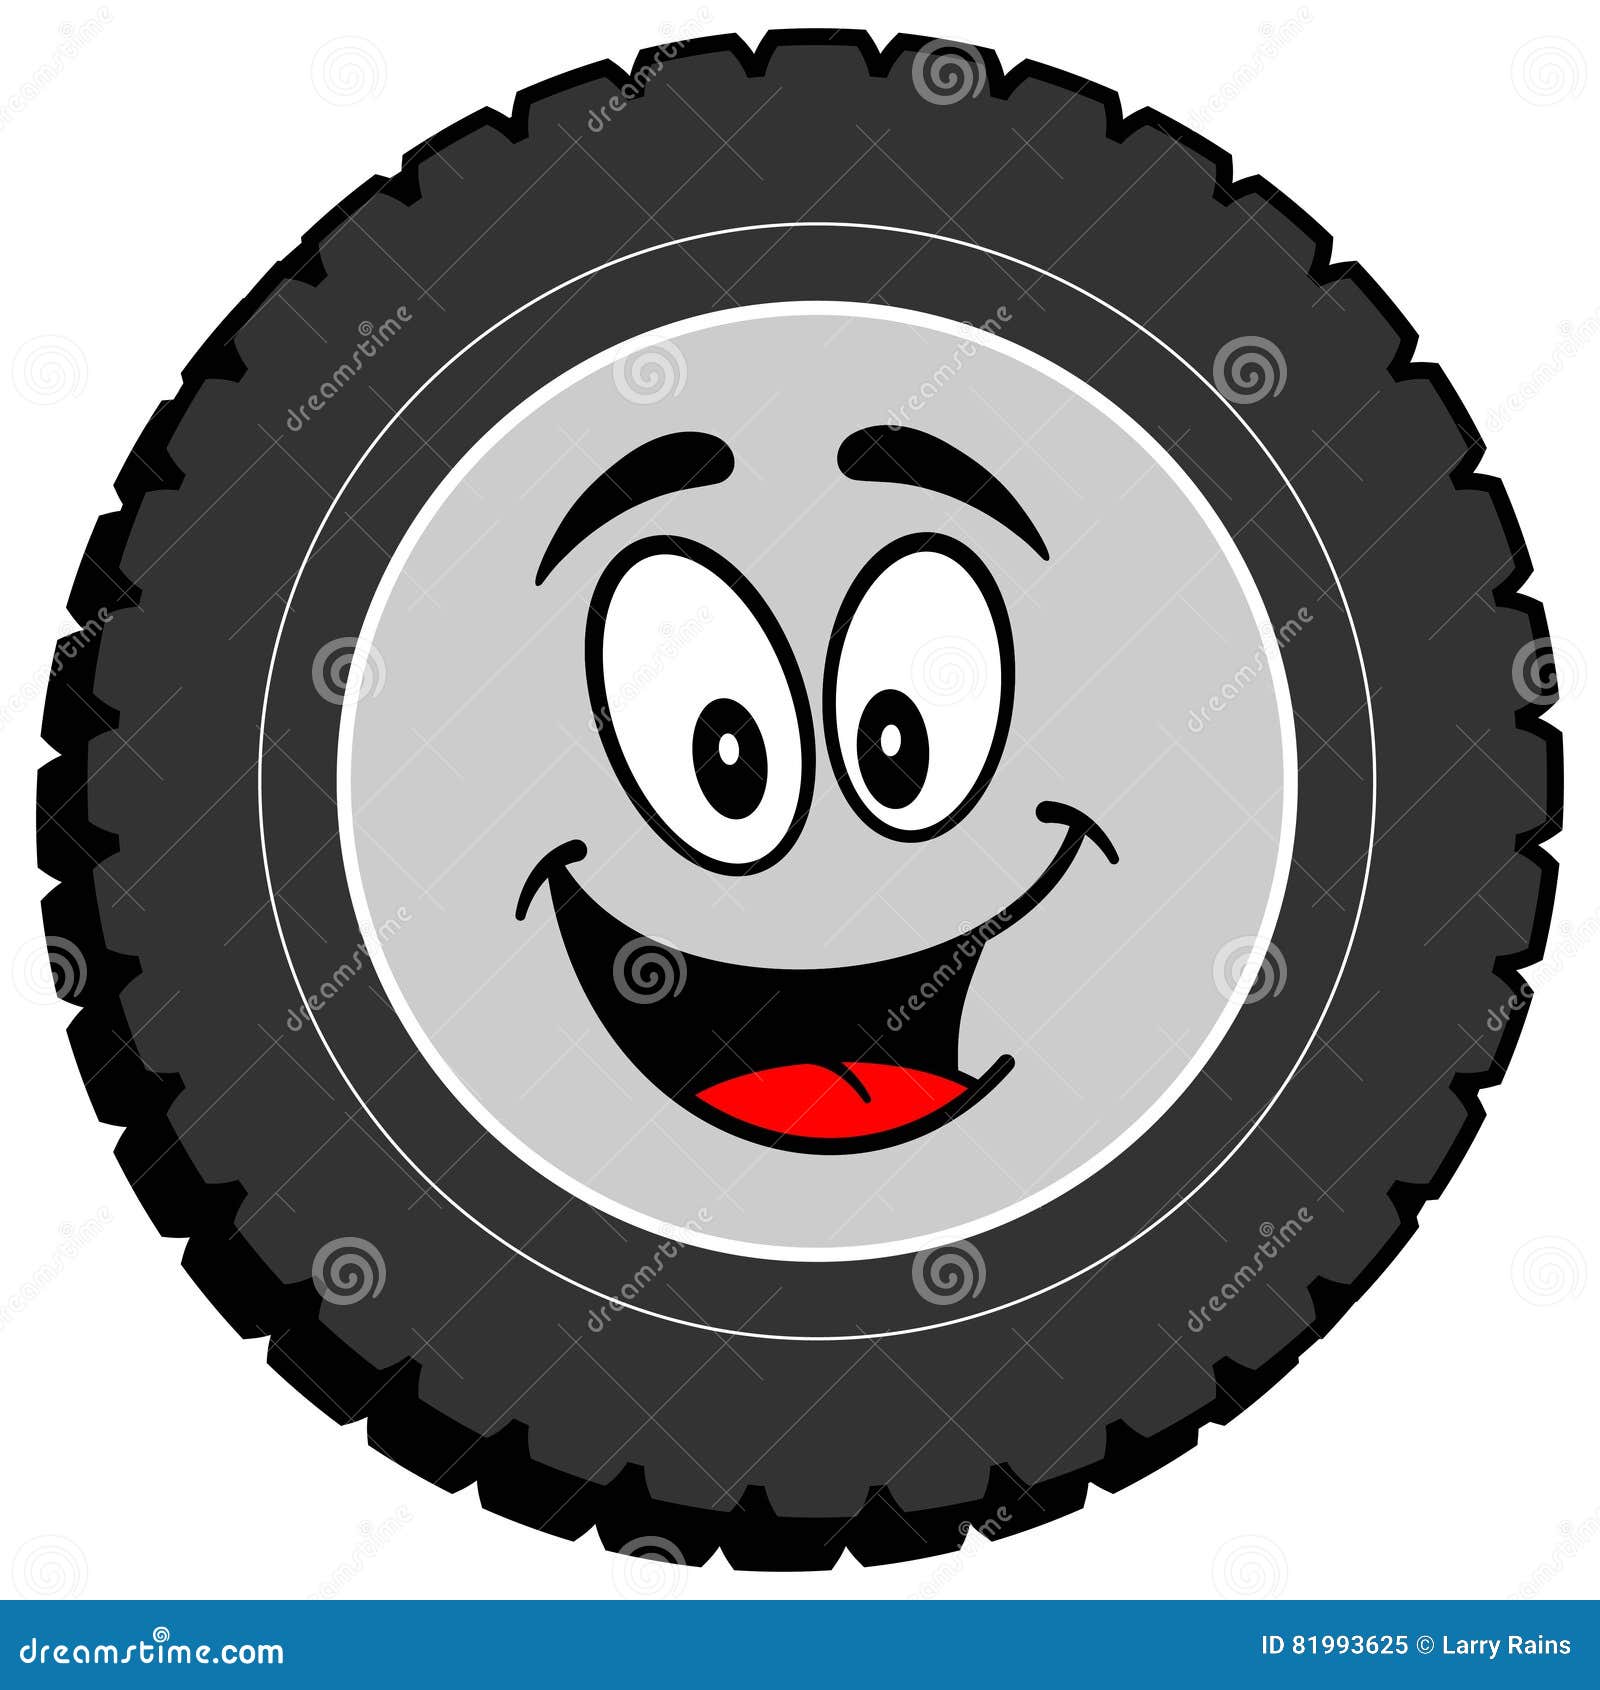 Tire Cartoon With Trophy Vector Illustration | CartoonDealer.com #81992242